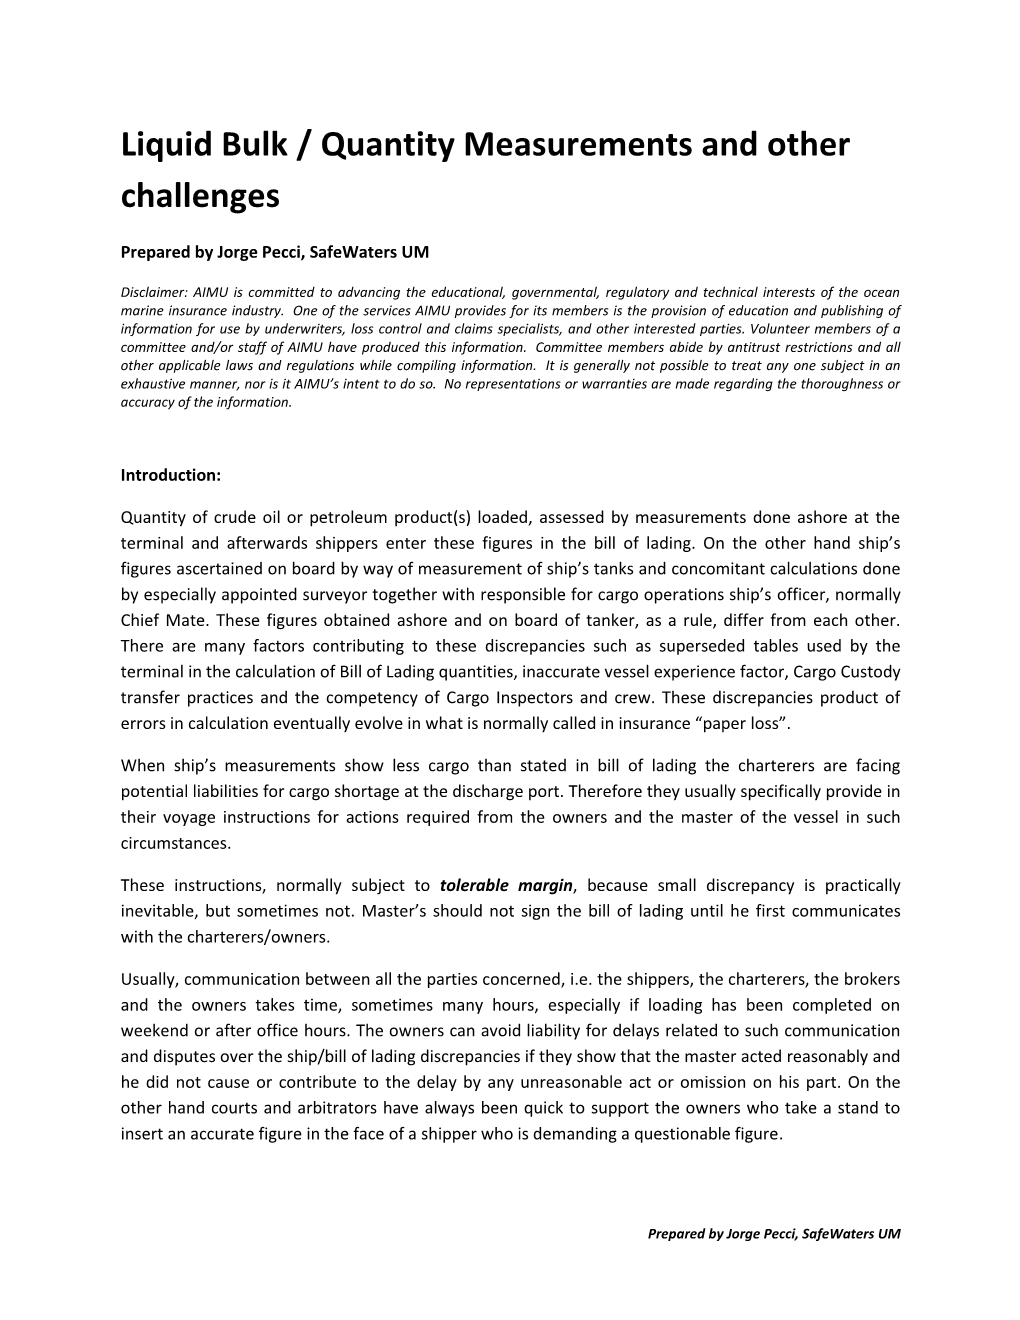 Liquid Bulk / Quantity Measurements and Other Challenges